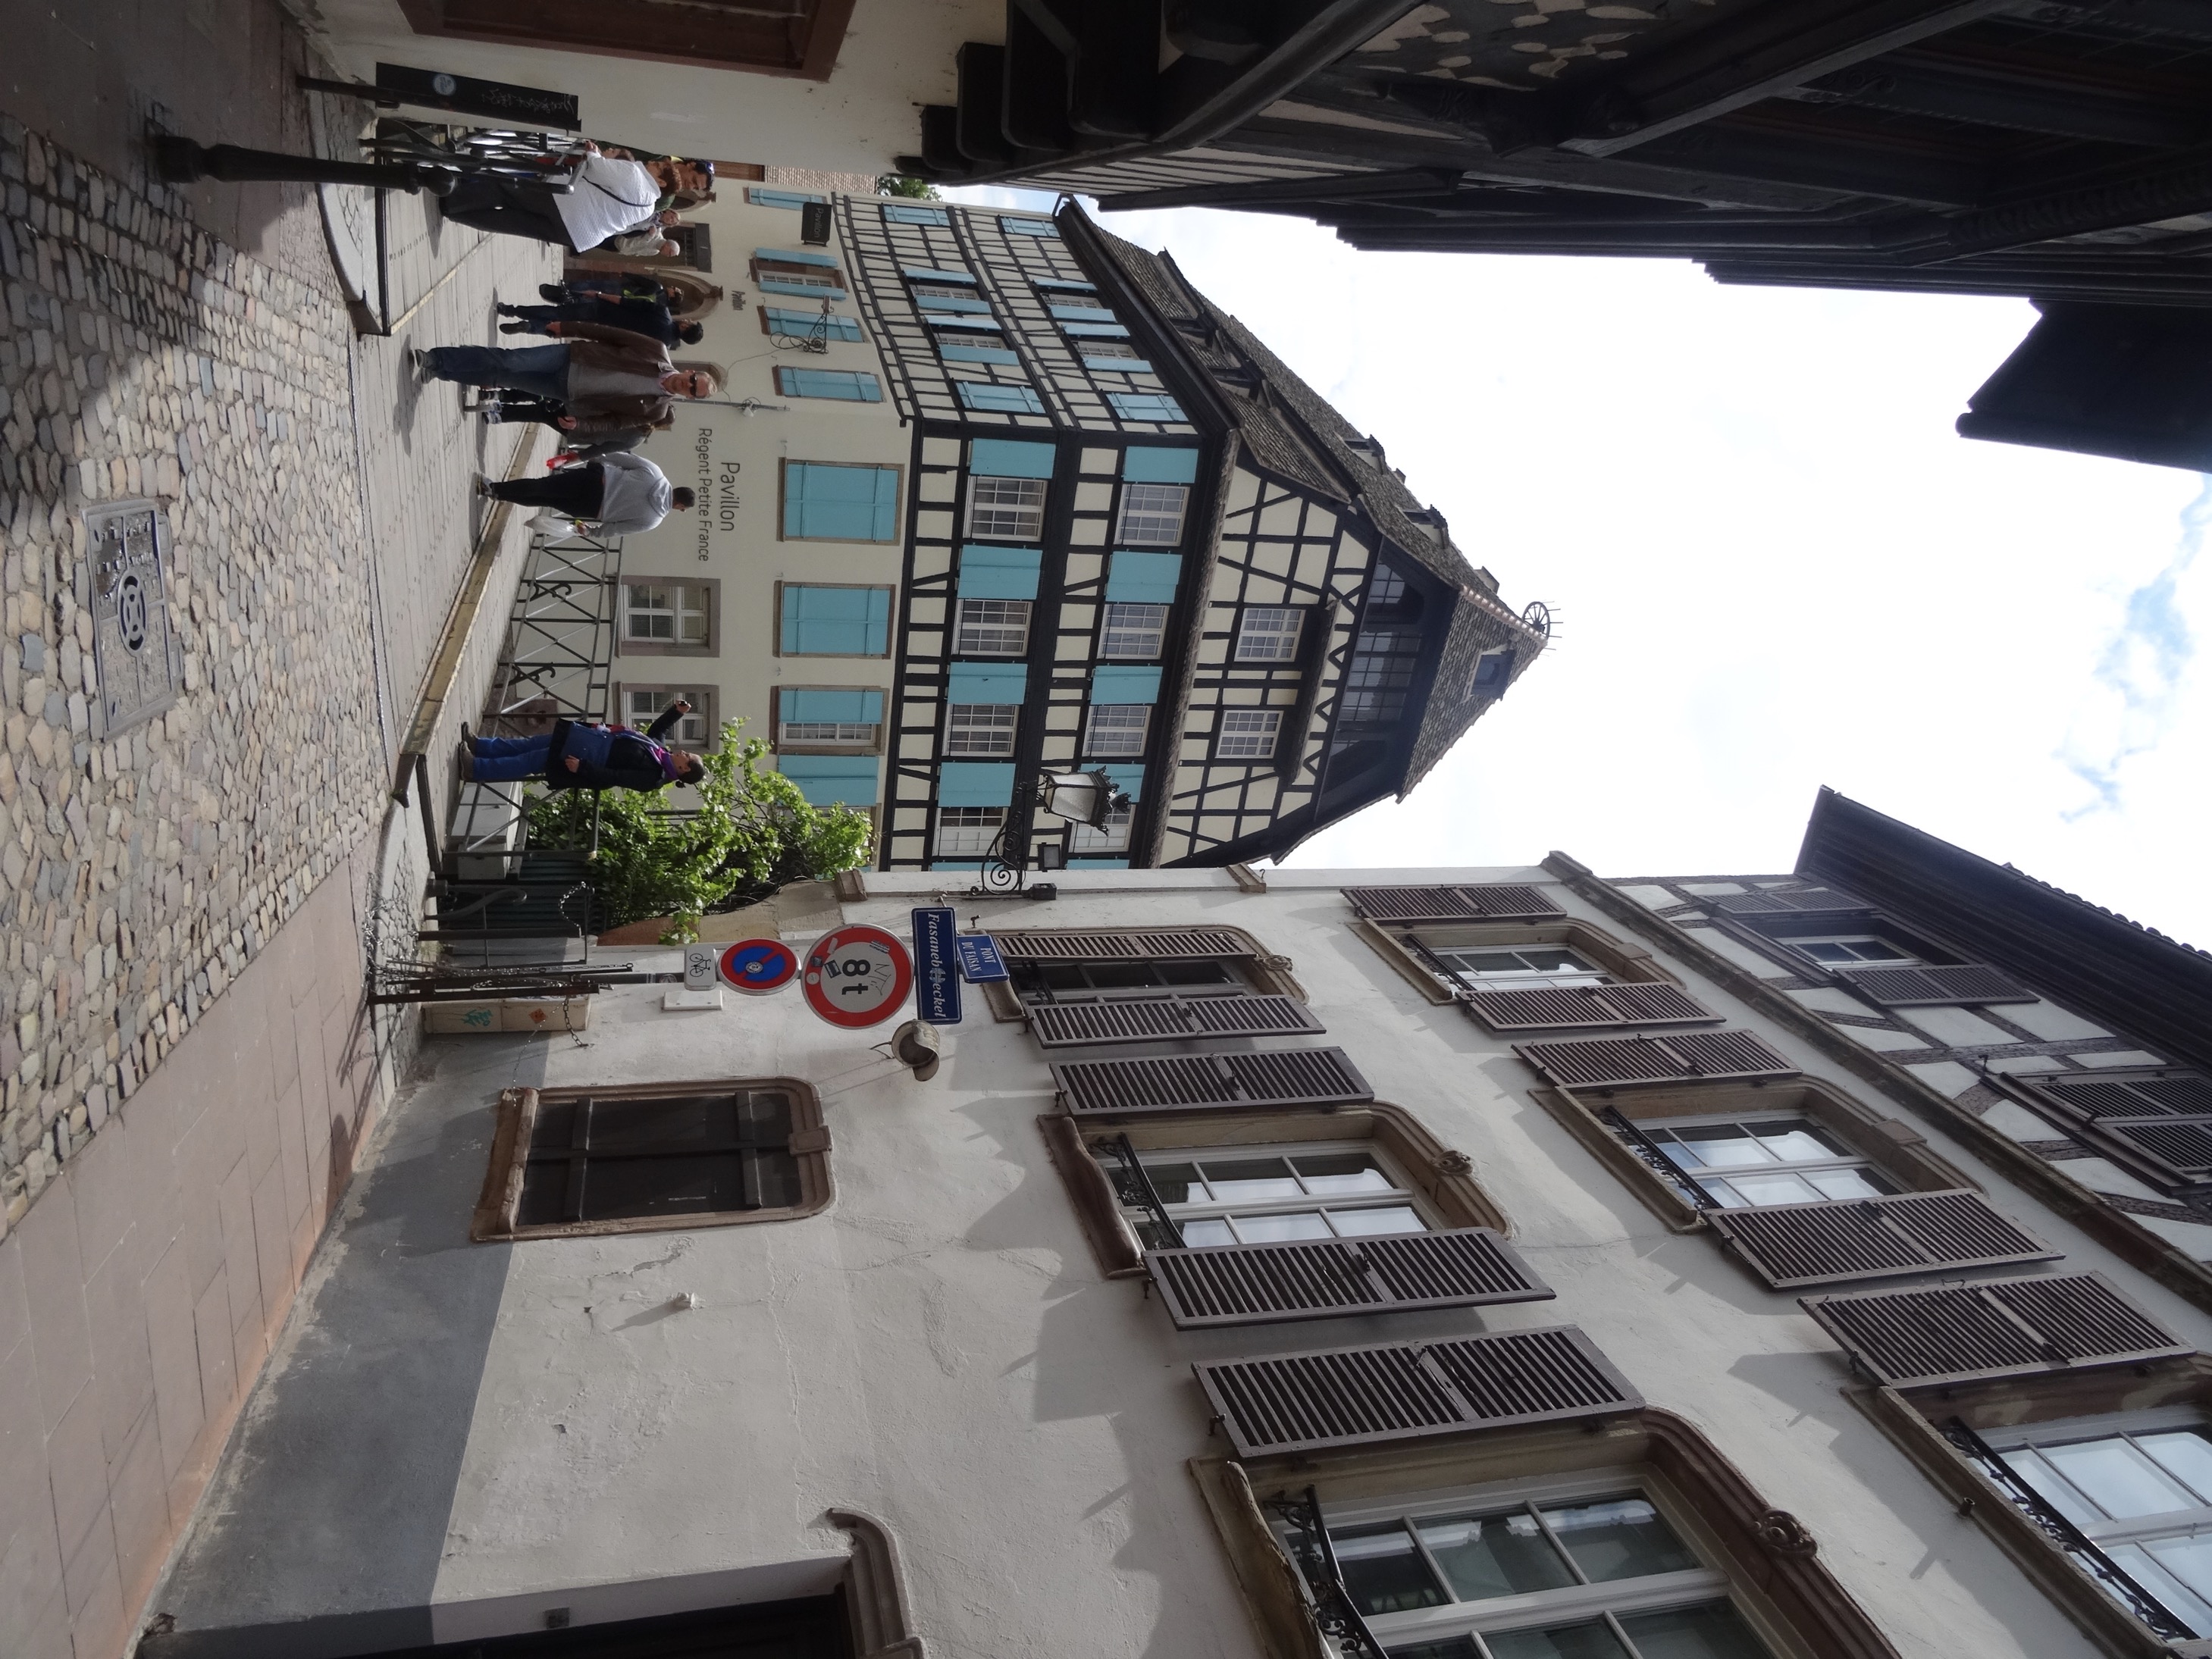 Petite France Strasbourg (17)